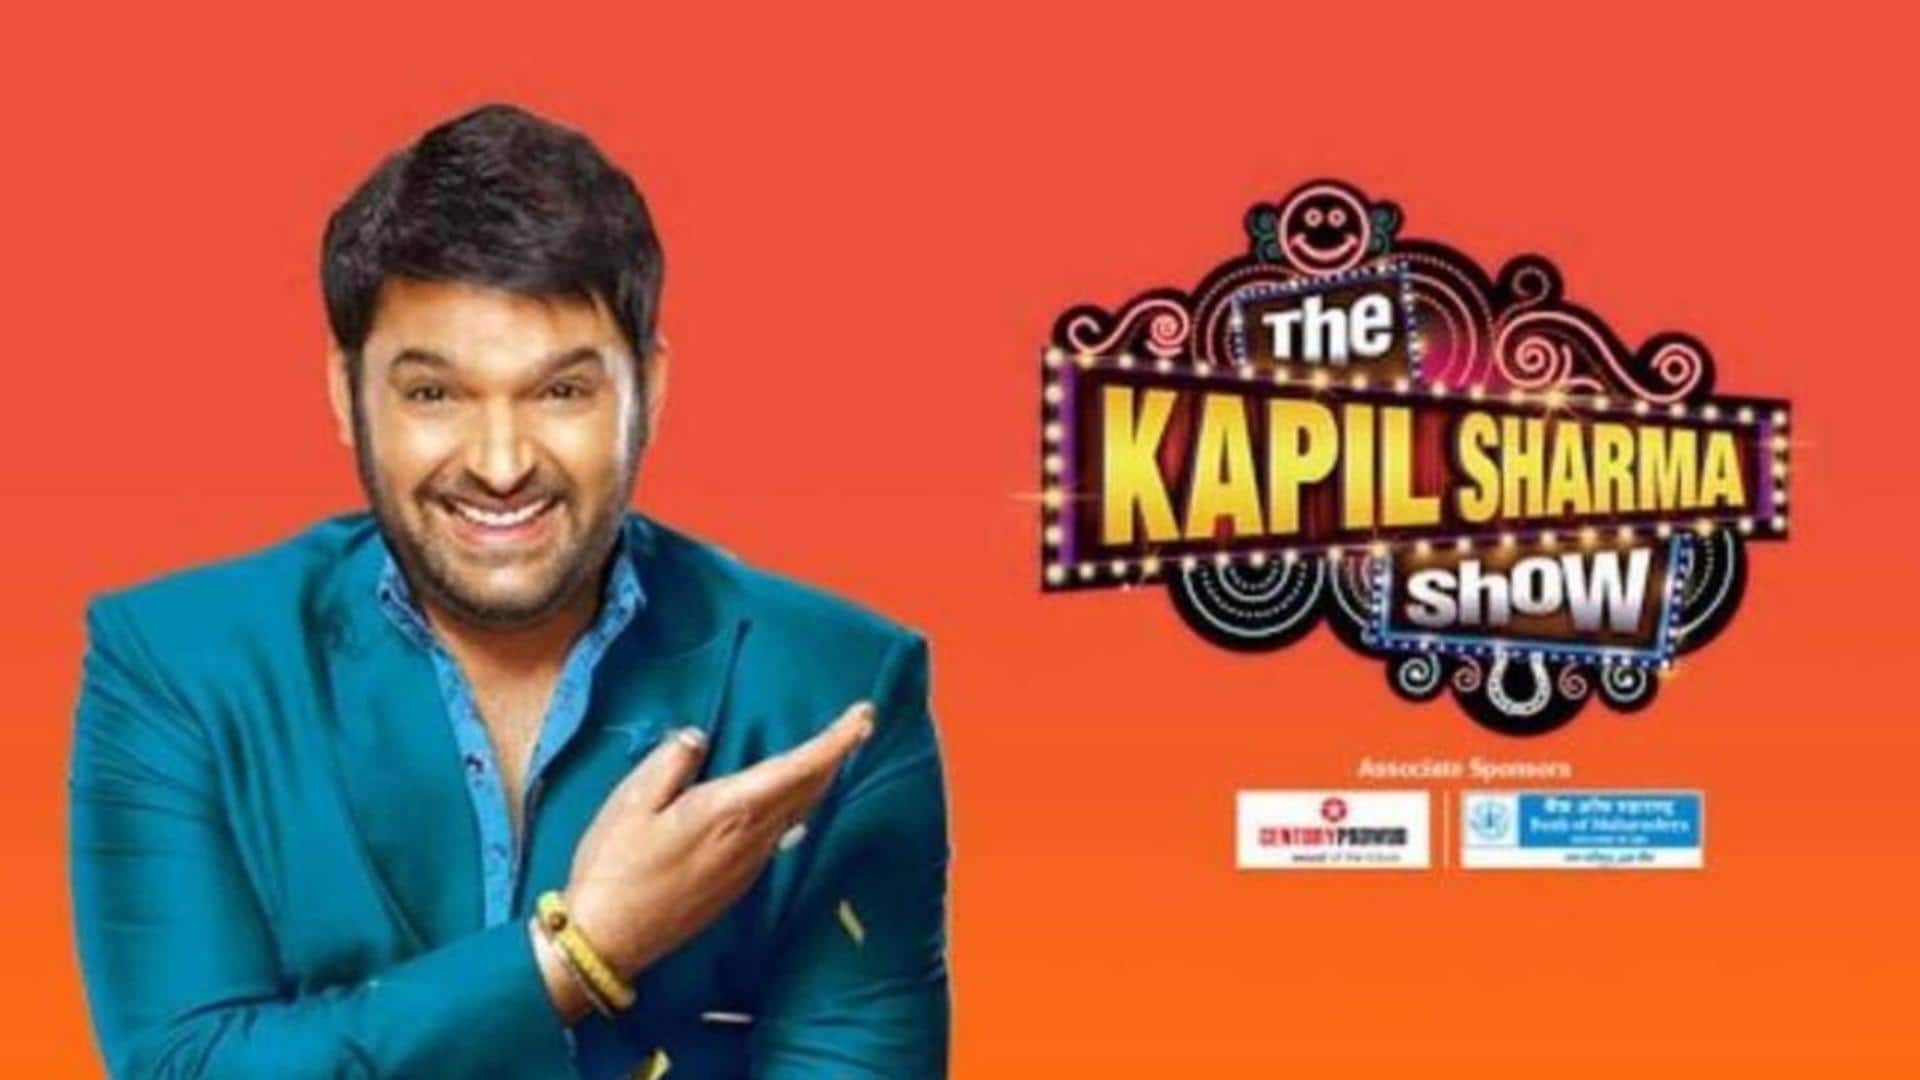 Sunil Grover returning to The Kapil Sharma Show- A dream that never came  true!